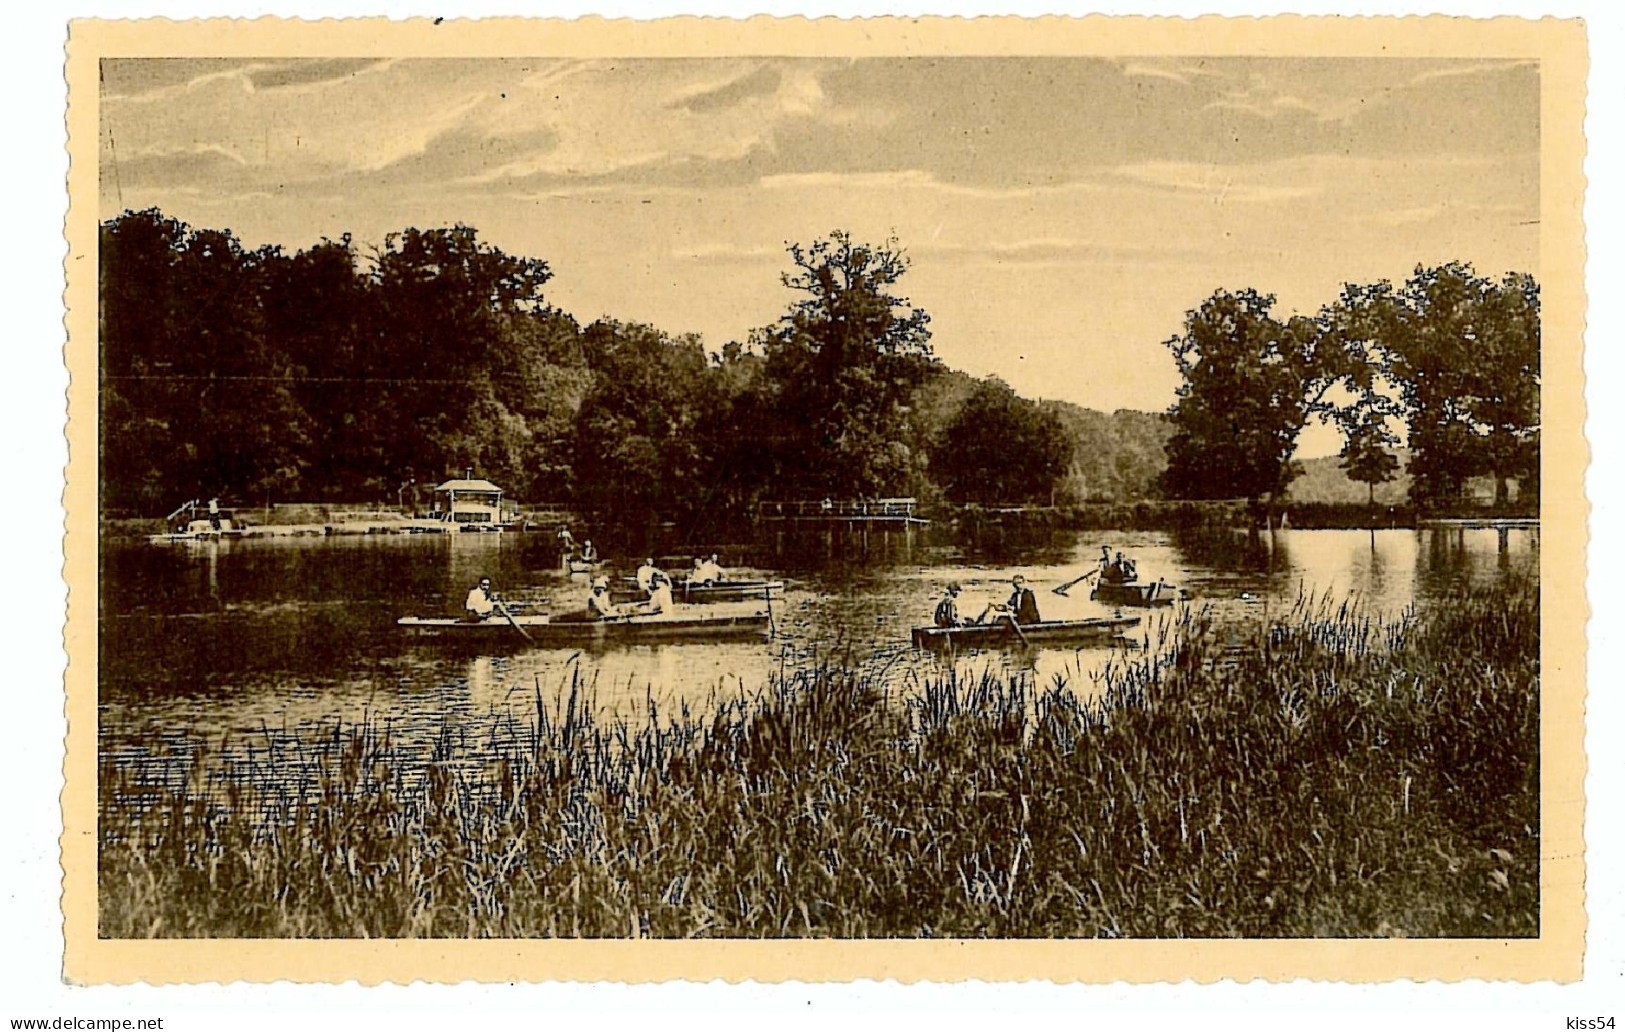 RO 81 - 875  SIBIU, Lacul Dumbravei, Romania - Old Postcard - Unused - Roumanie